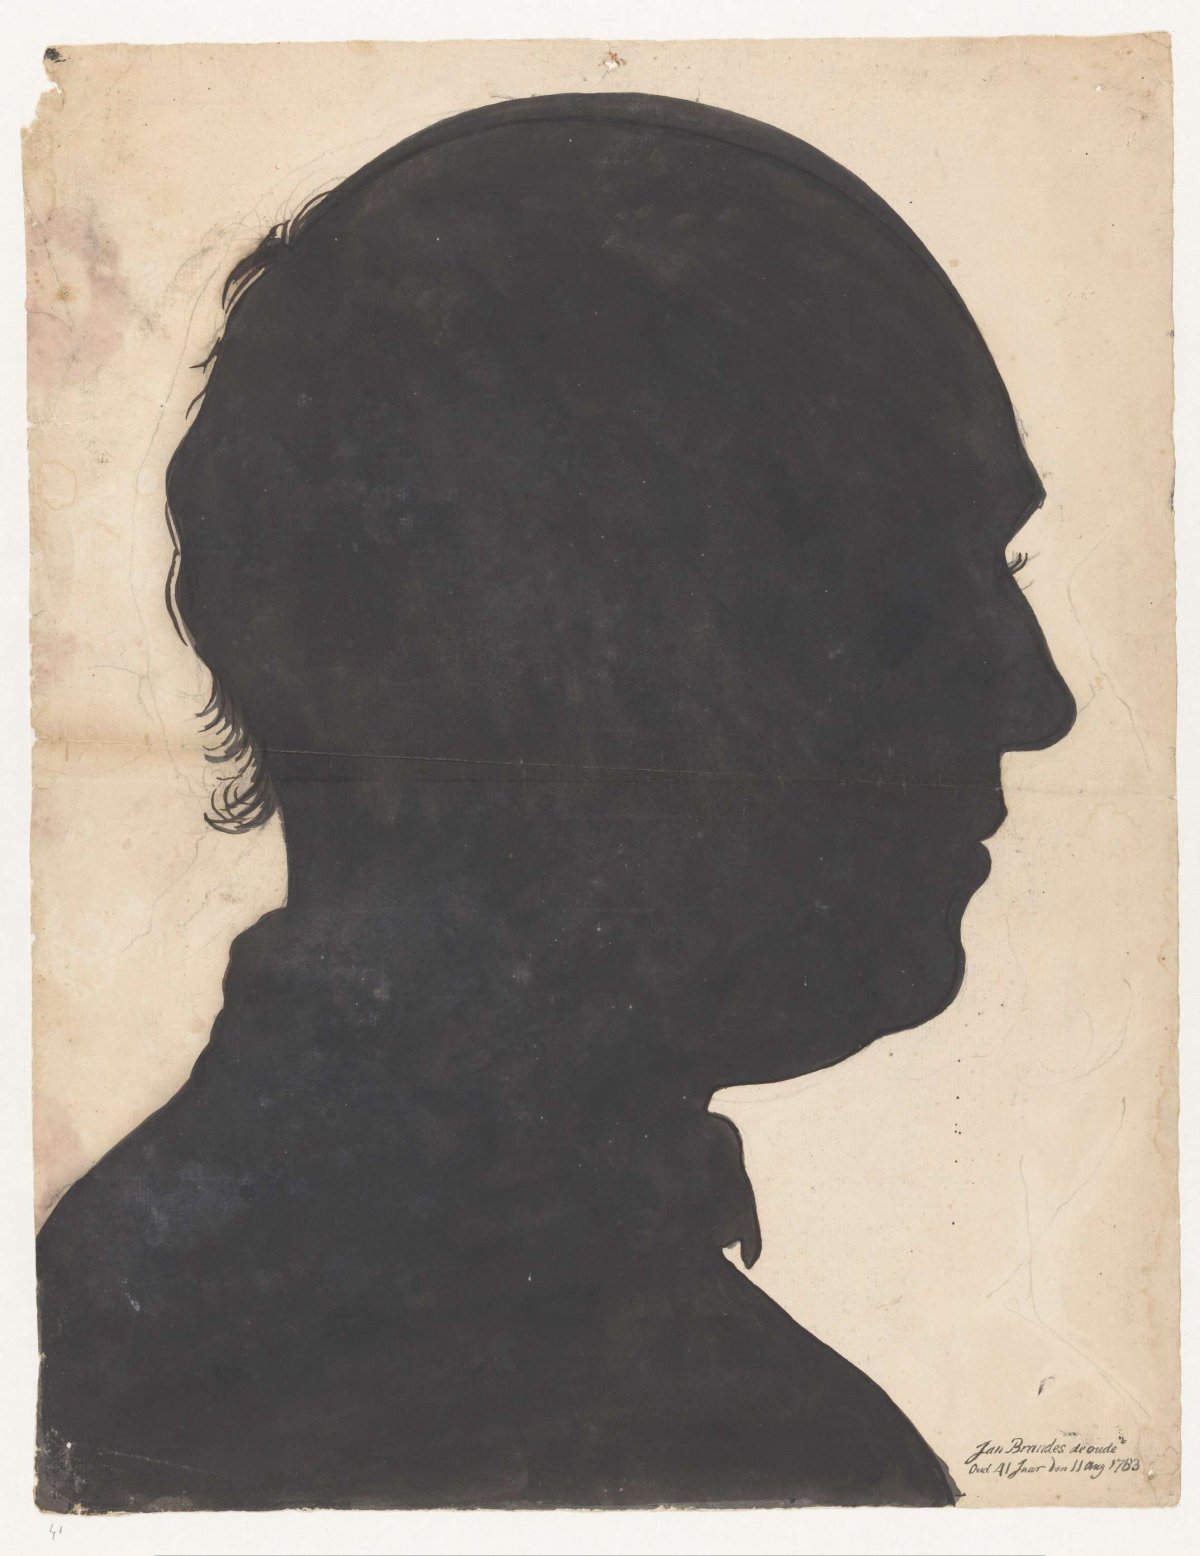 Silhouette portrait of Jan Brandes, Jan Brandes, 1783